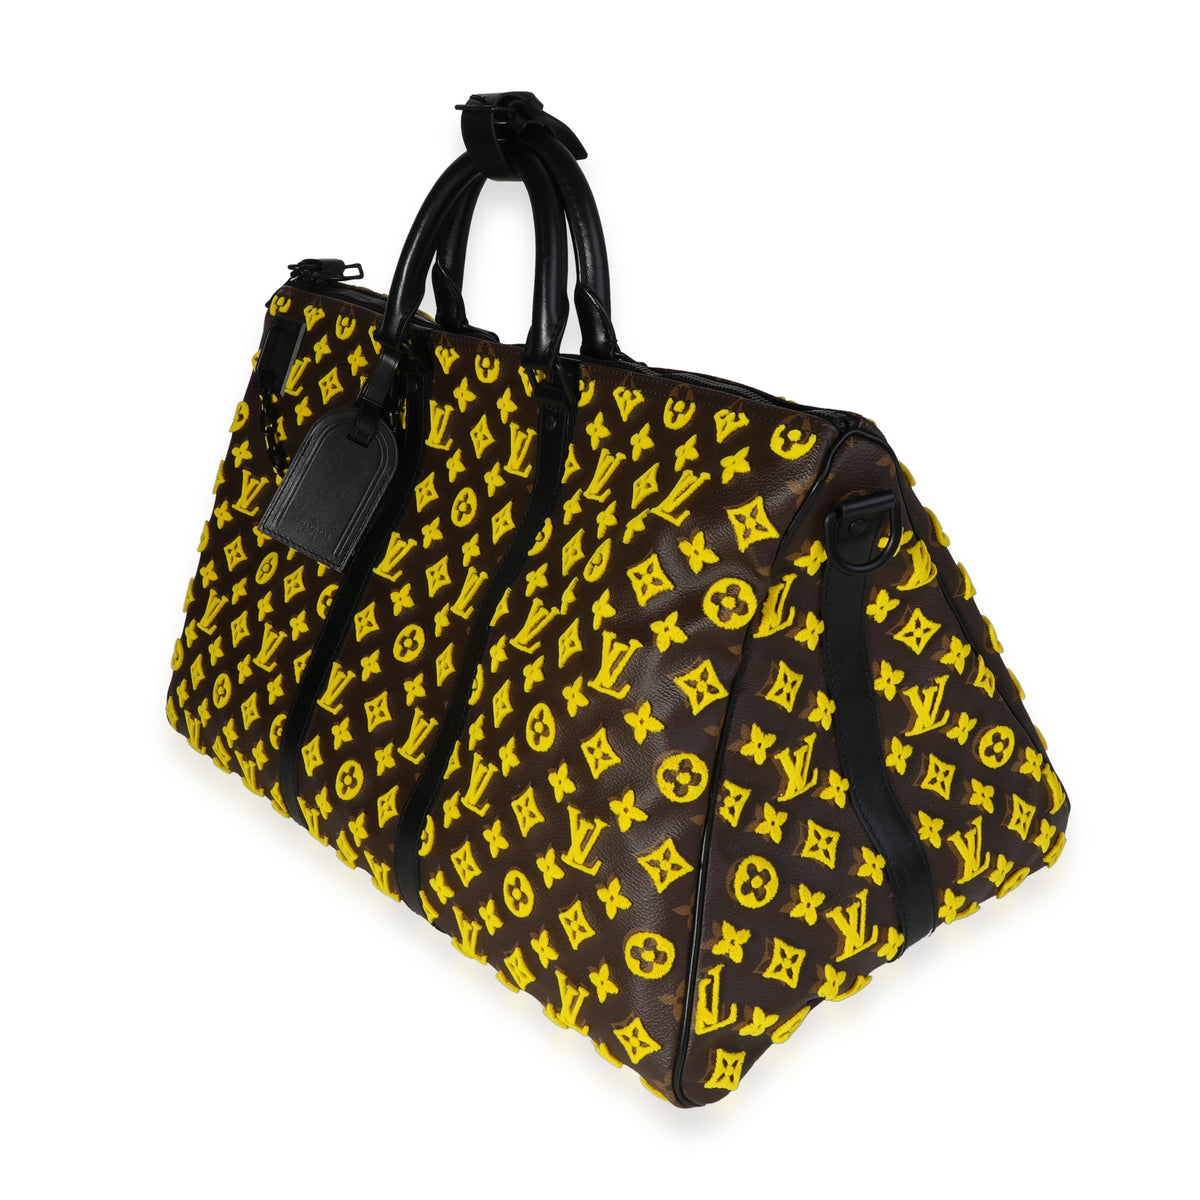 Louis Vuitton Triangle Monogram Handbag